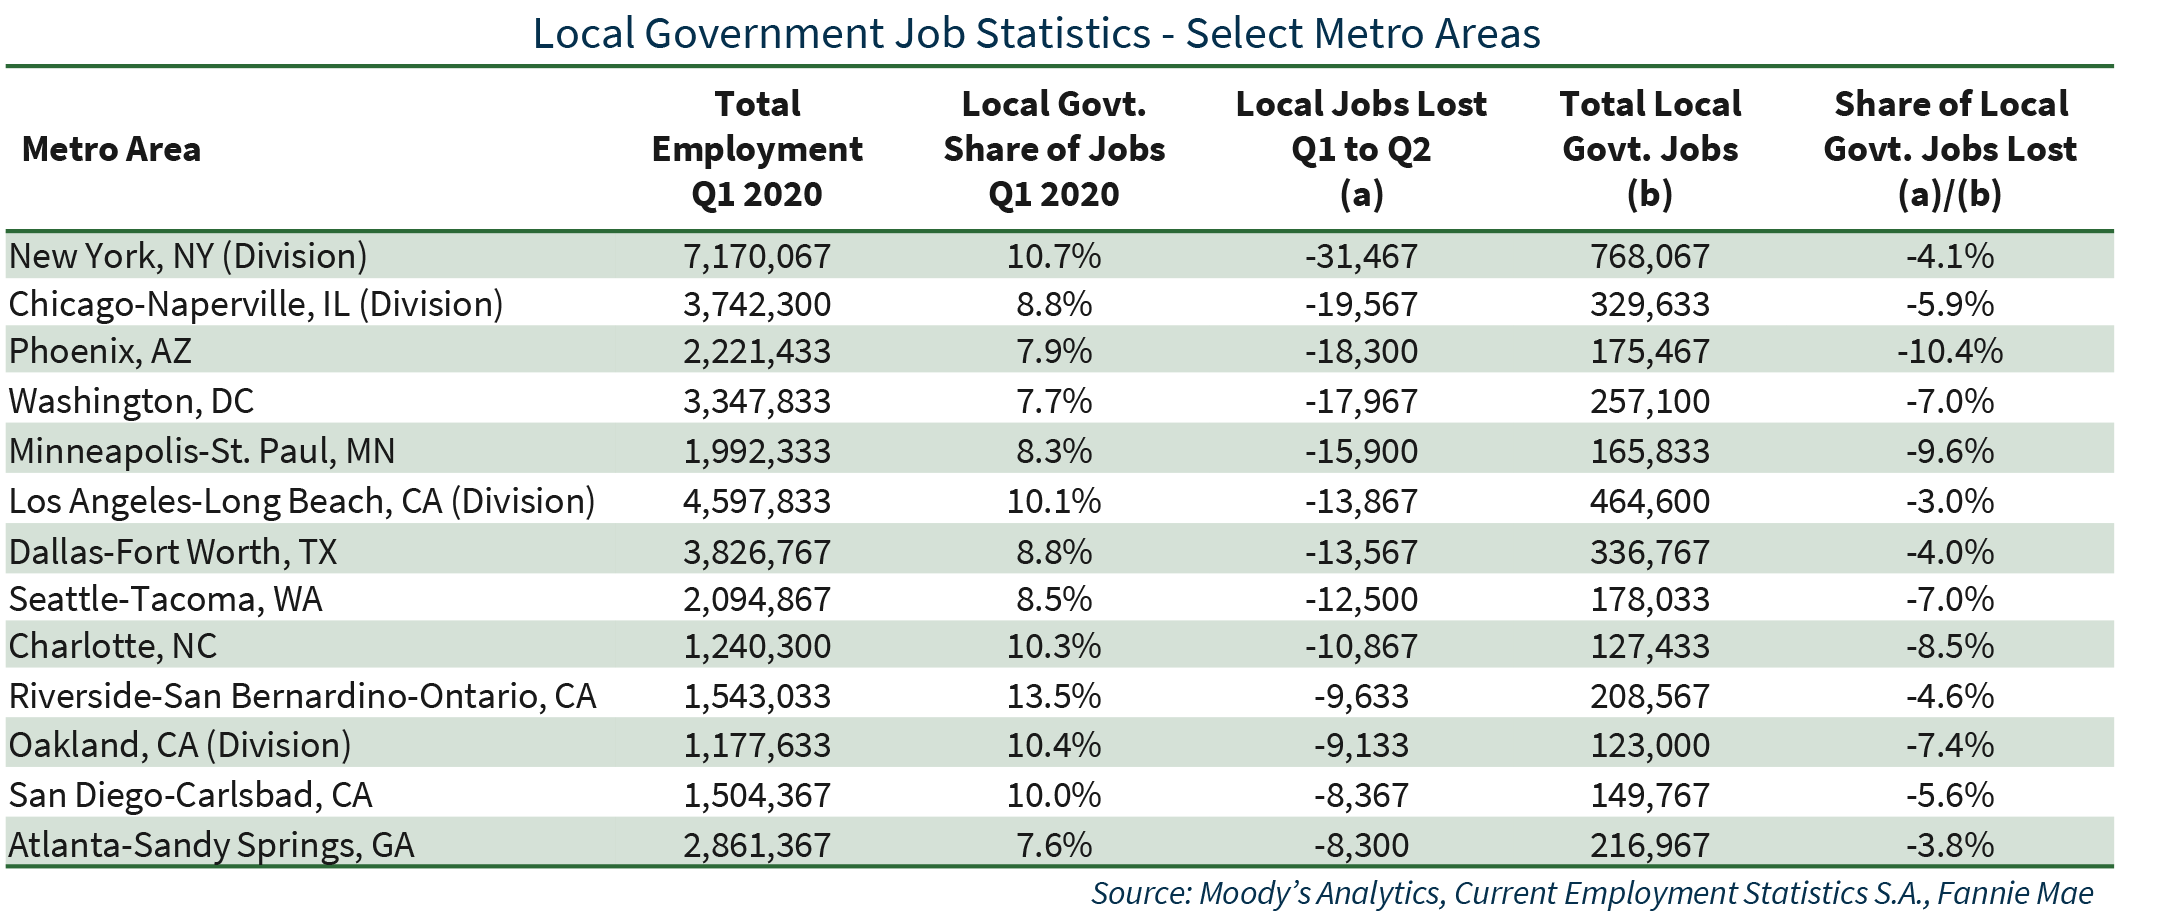 Local Government Job Statistics - Select Metro Areas